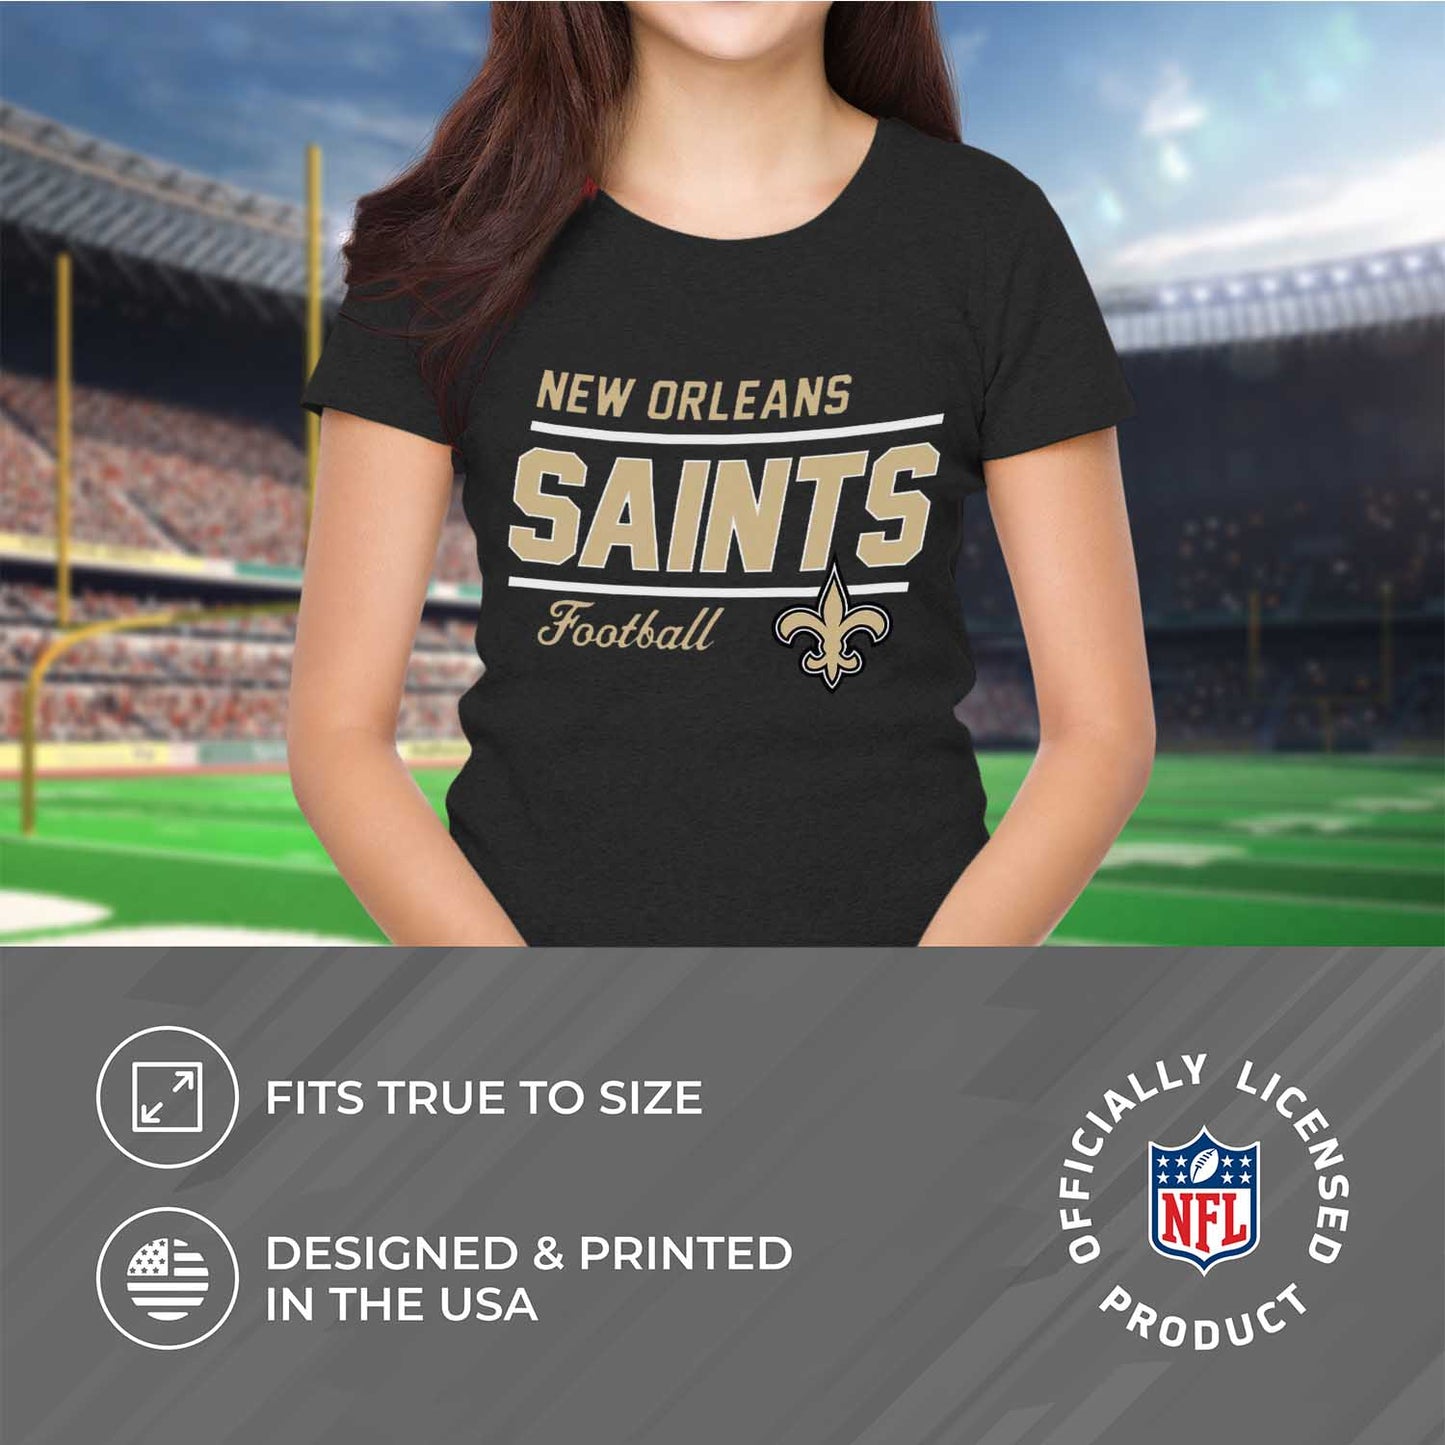 New Orleans Saints NFL Womens Plus Size Relaxed Fit T-Shirt - Black